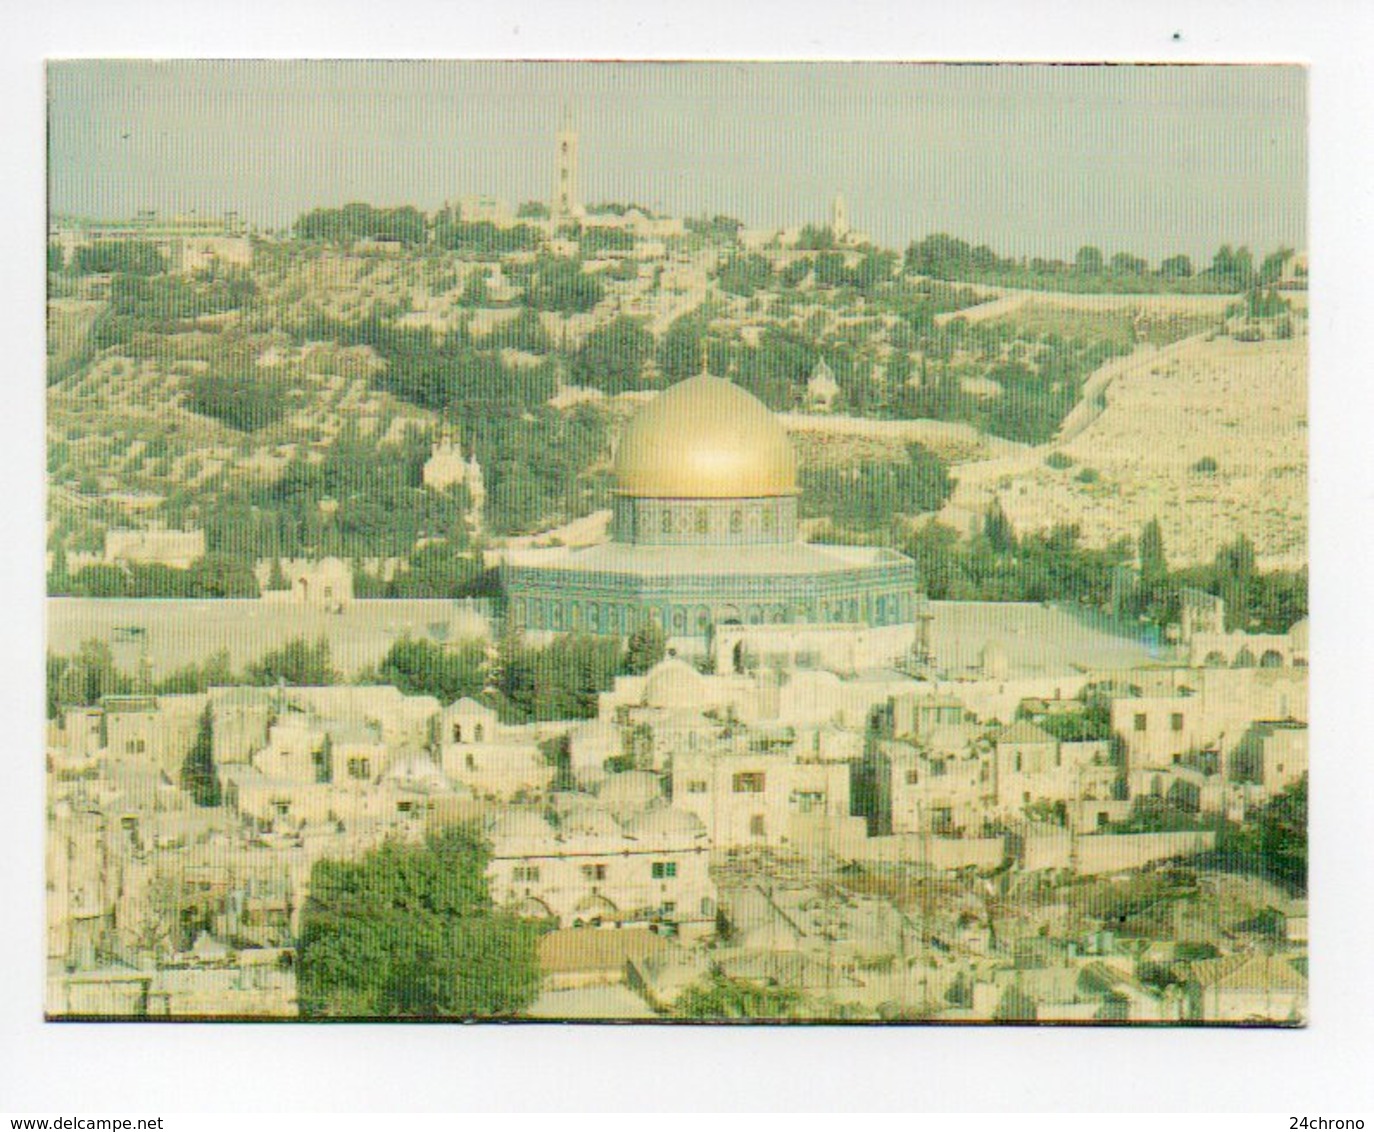 Israel: Jerusalem, The Old City (19-1806) - Israel